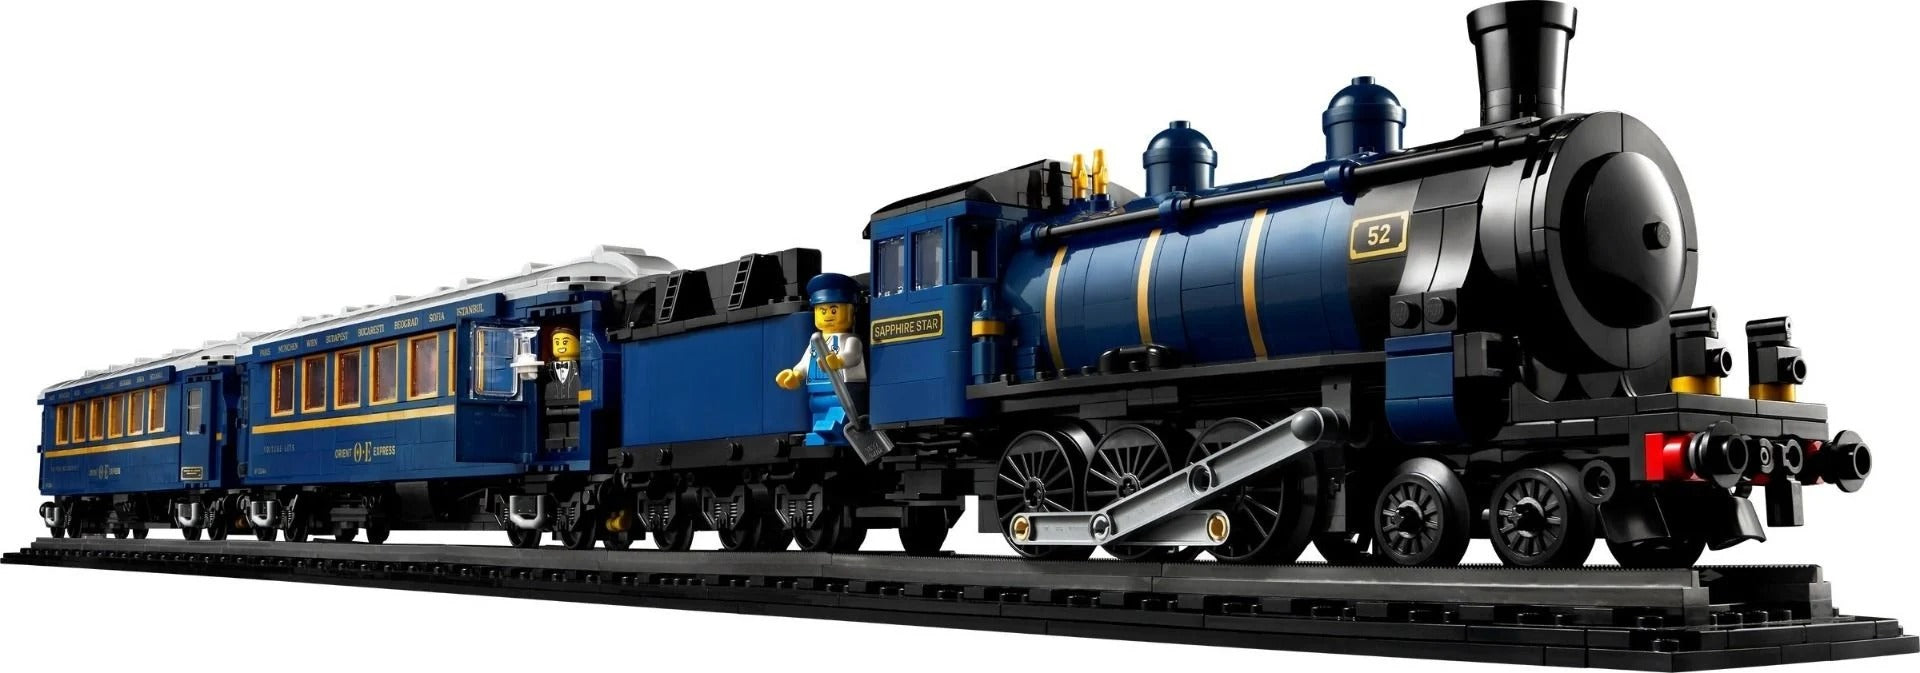 LEGO IDEAS The Orient Express Train